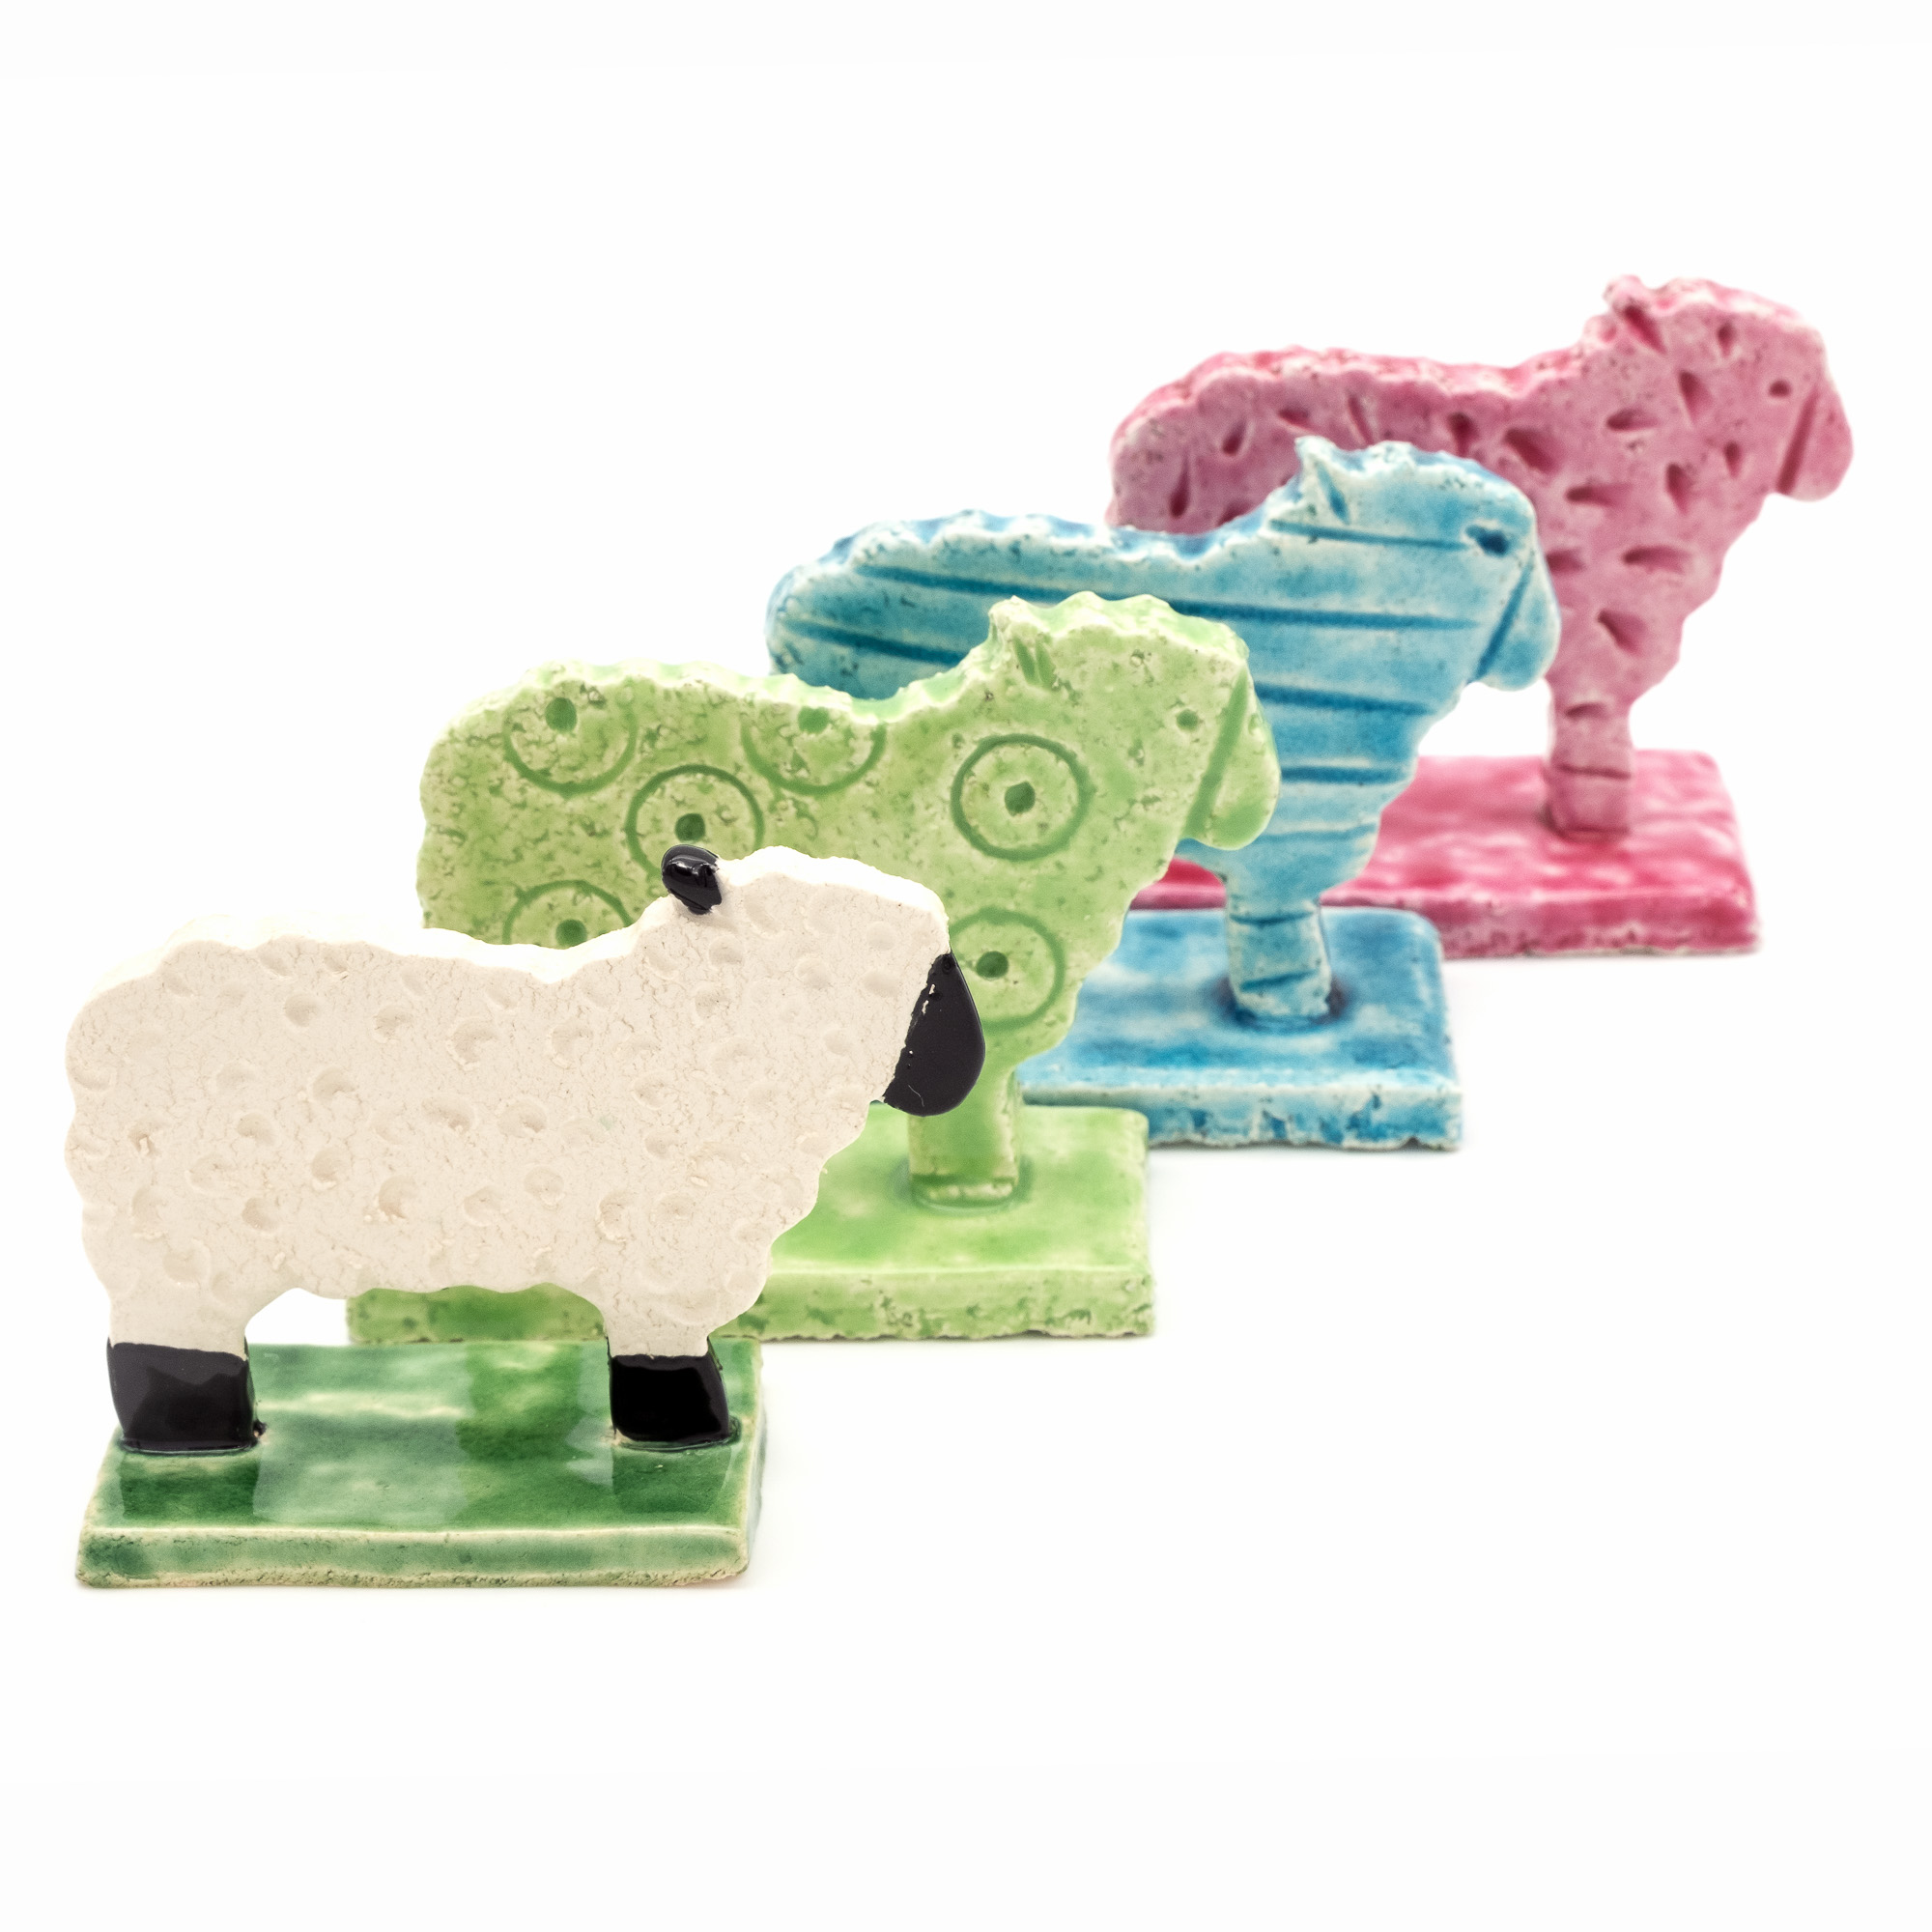 Pecorelle in ceramica - Stefania Mairano Creazioni in Ceramica